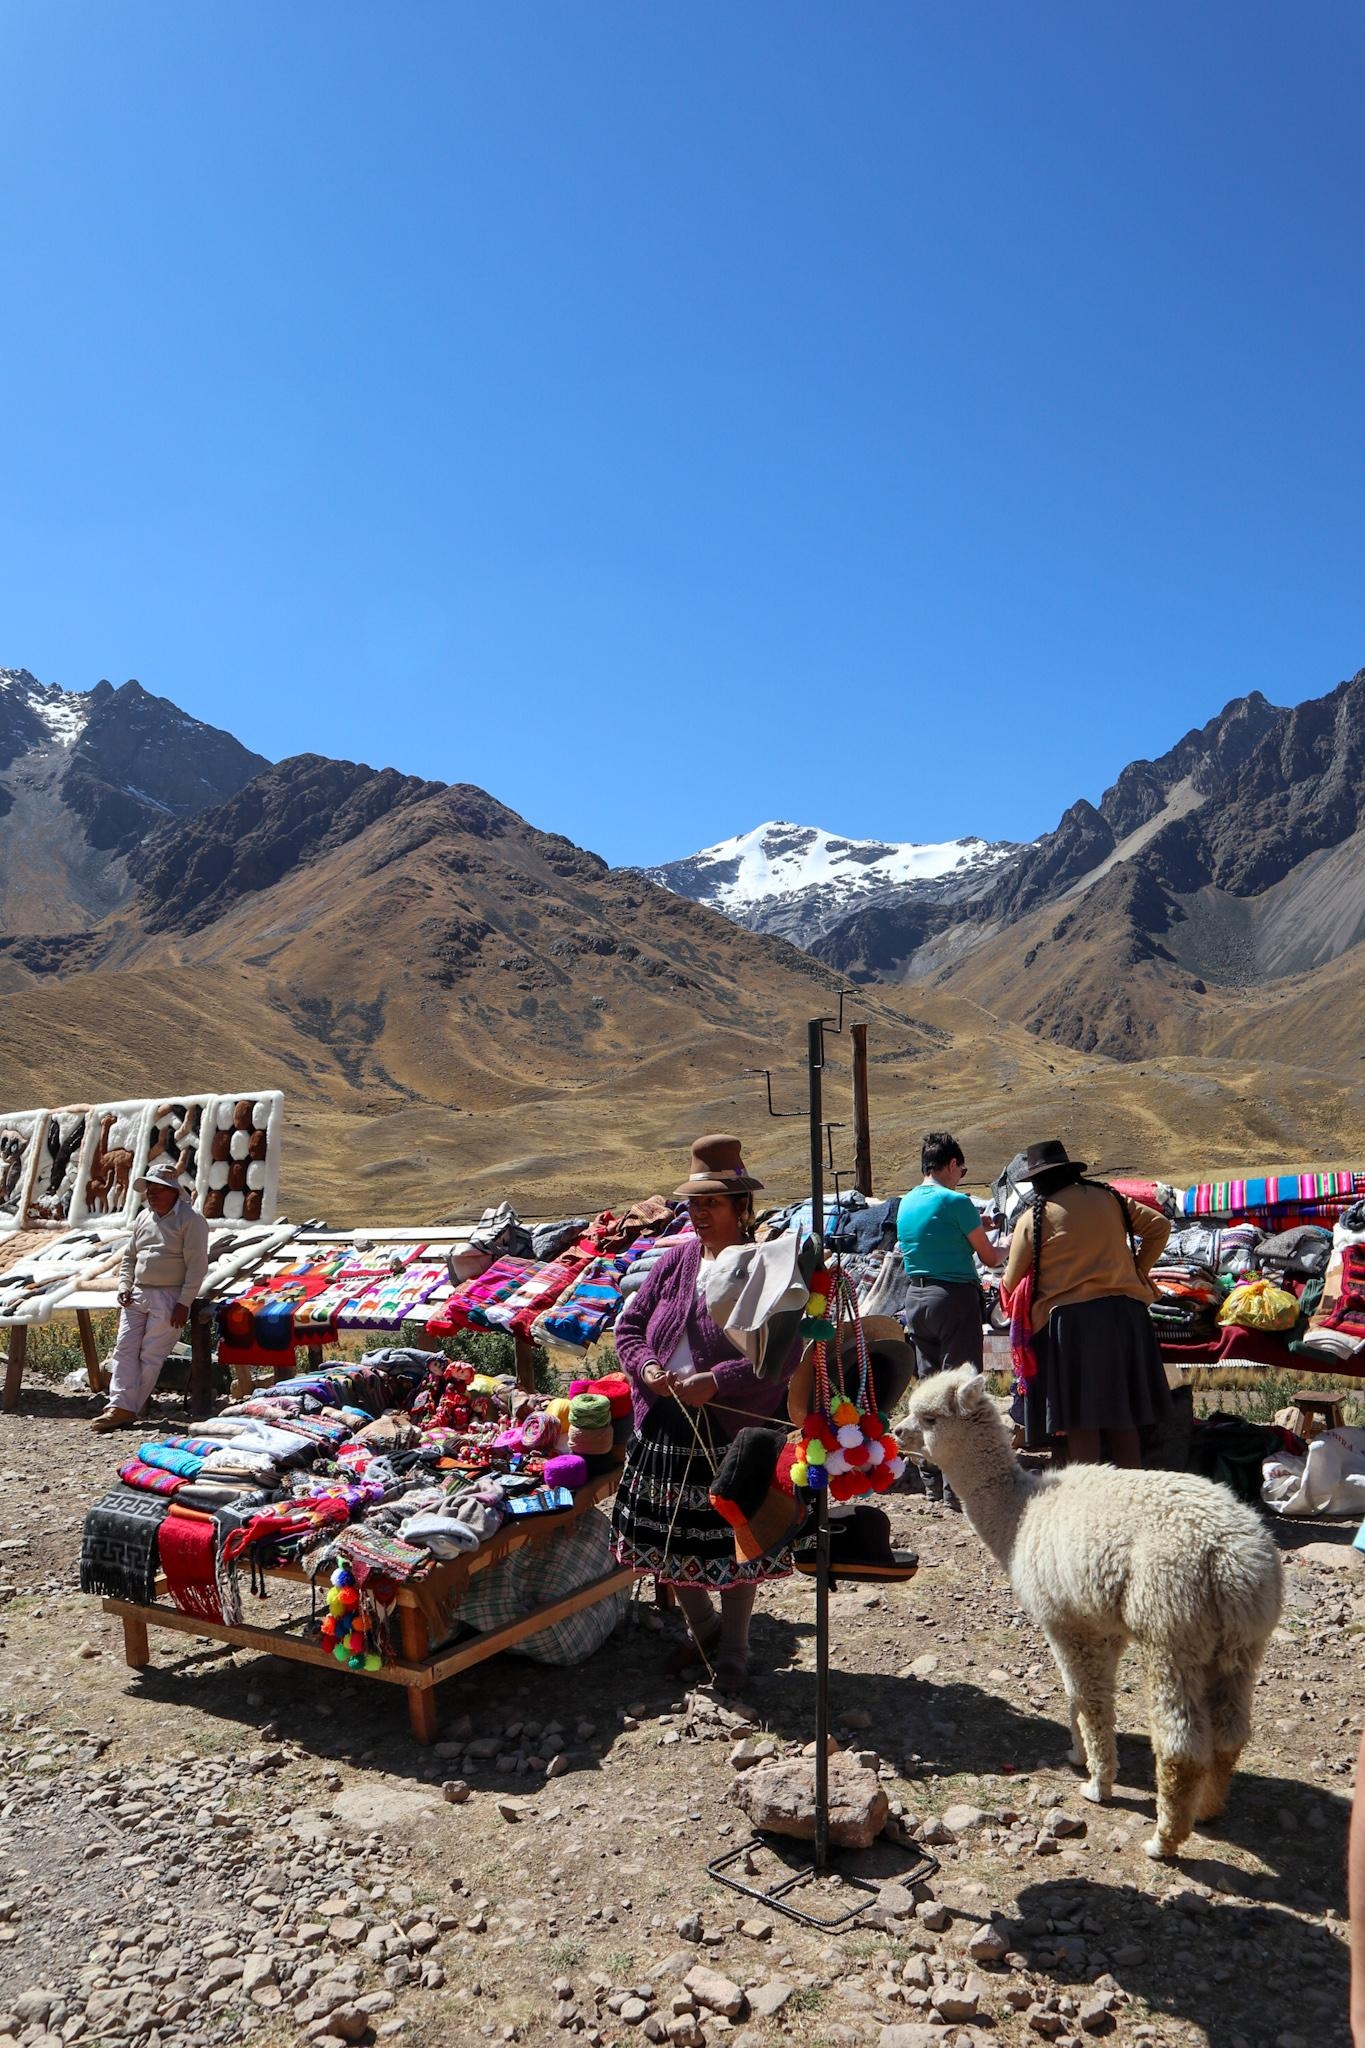 Mitbringsel shoppen auf fast 4000 m Höhe 😅⛰️ #peru #vacay 